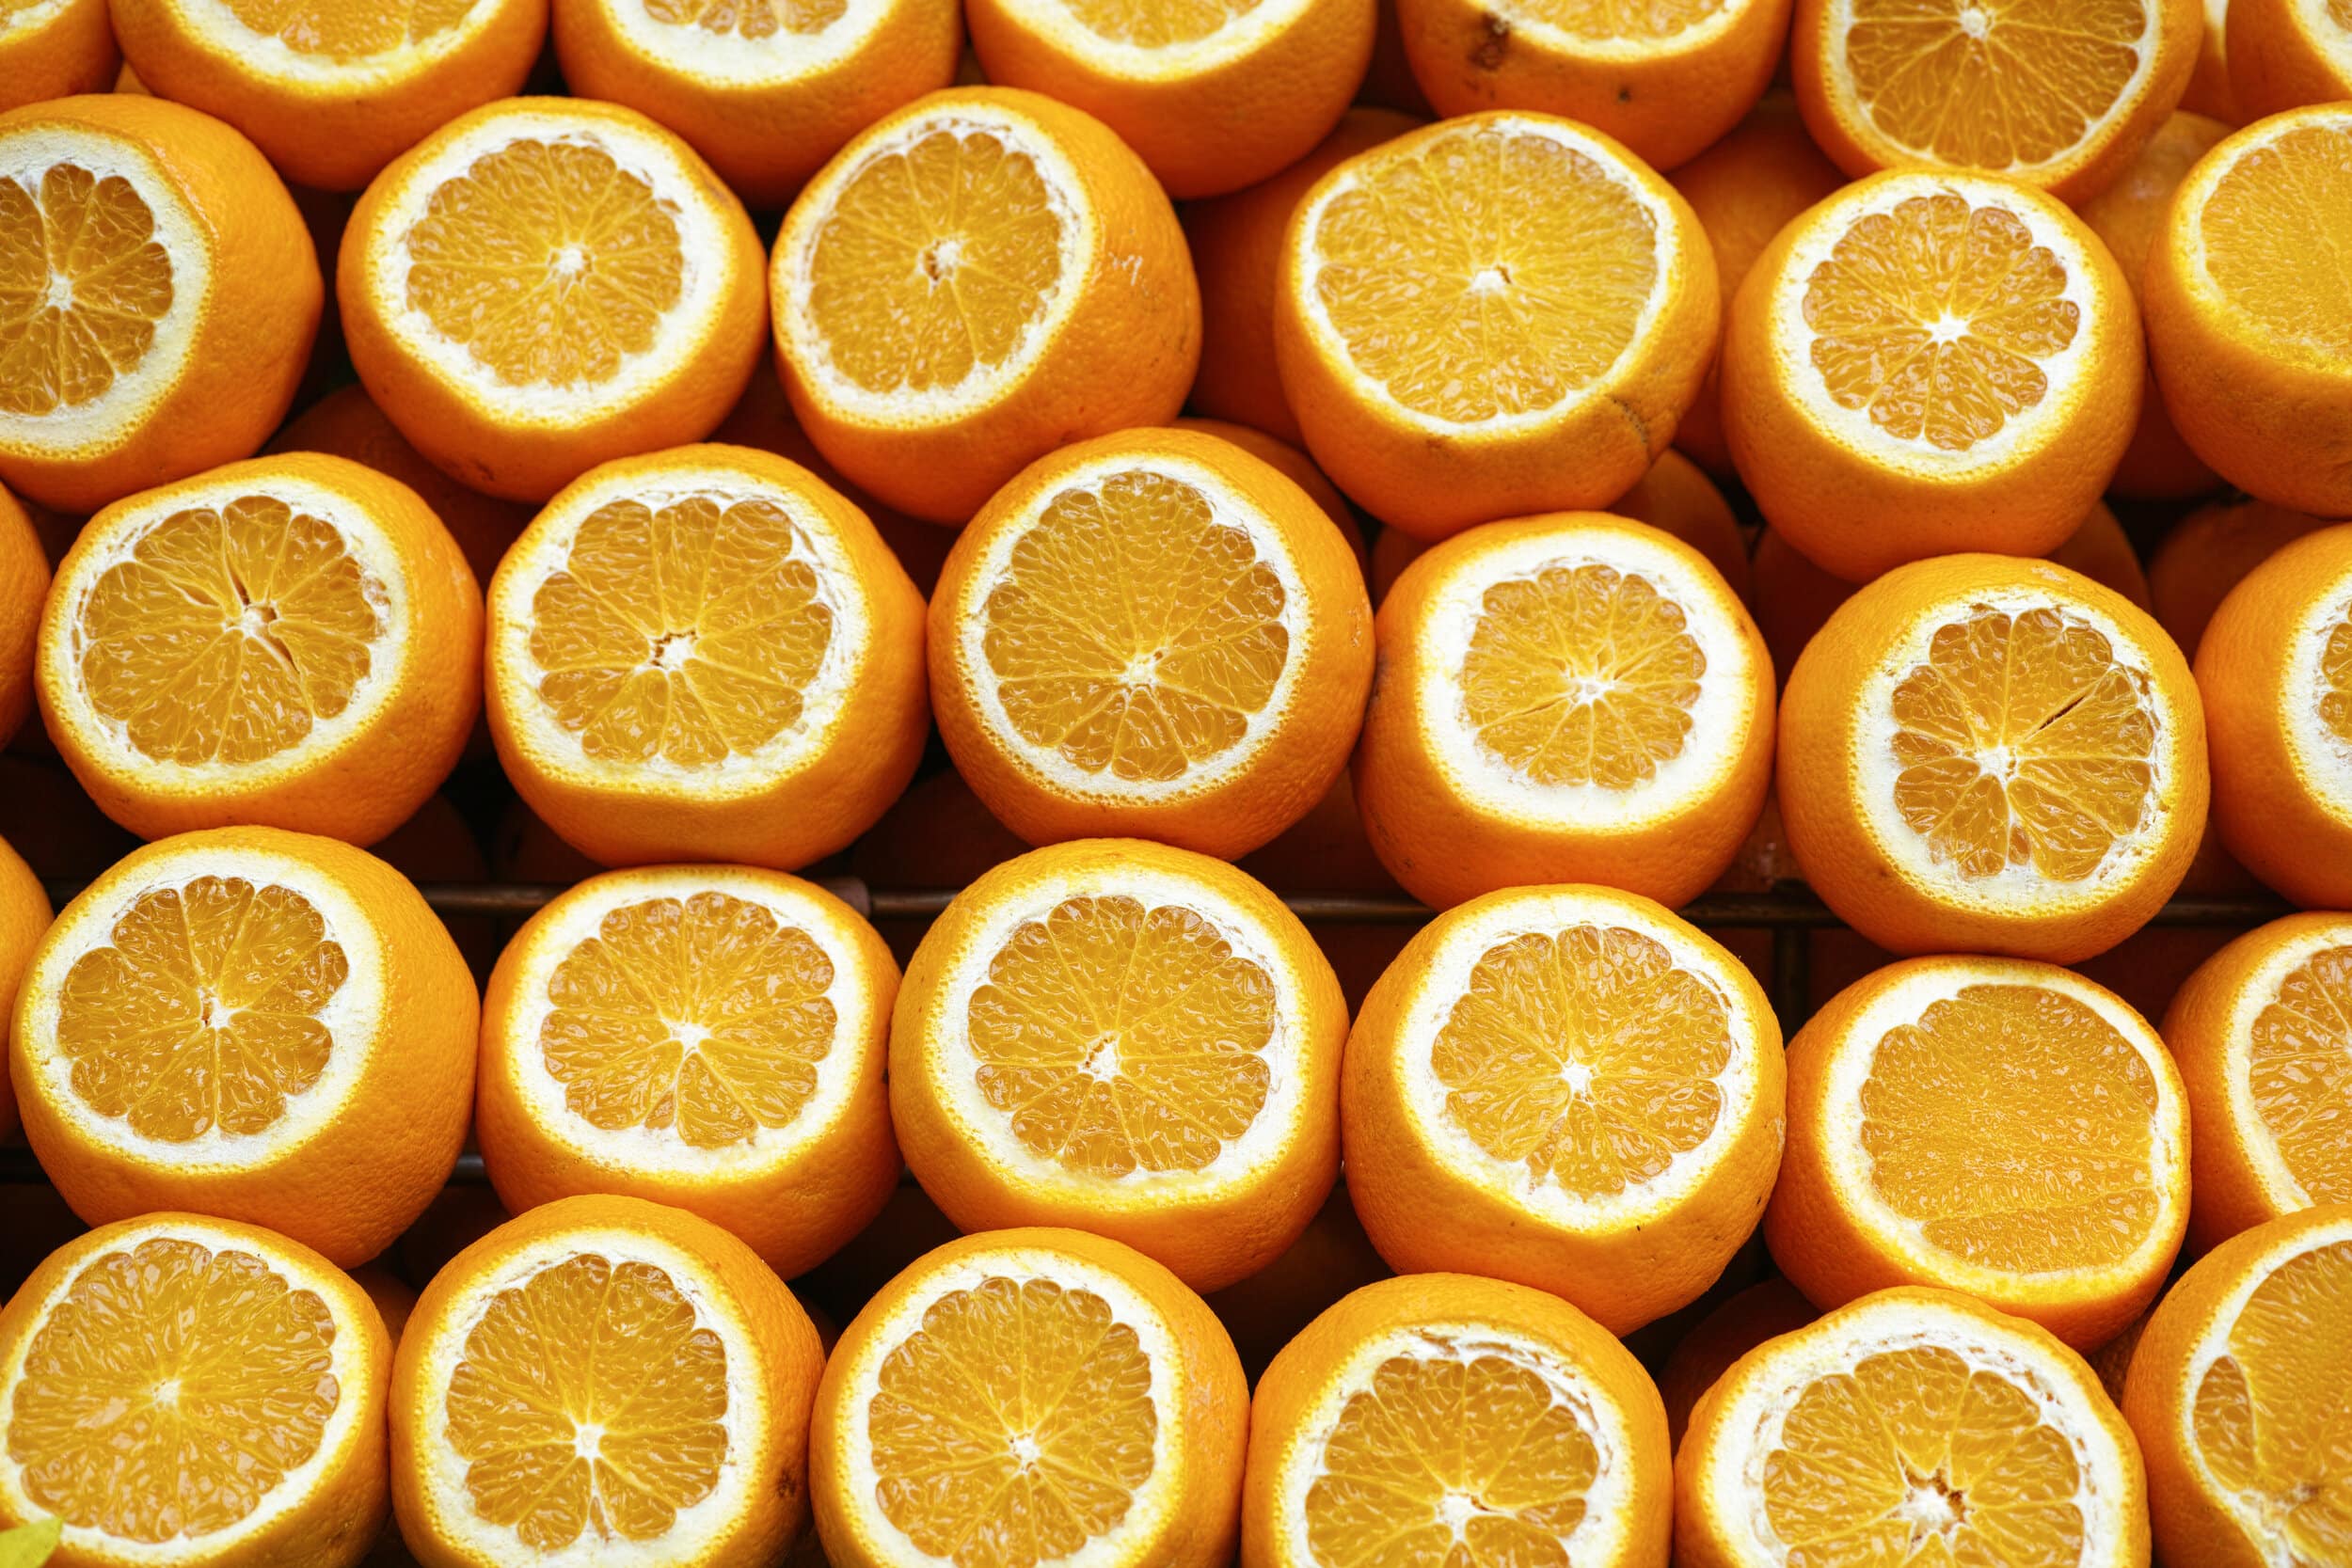 Canva - Sliced Oranges (1).jpg